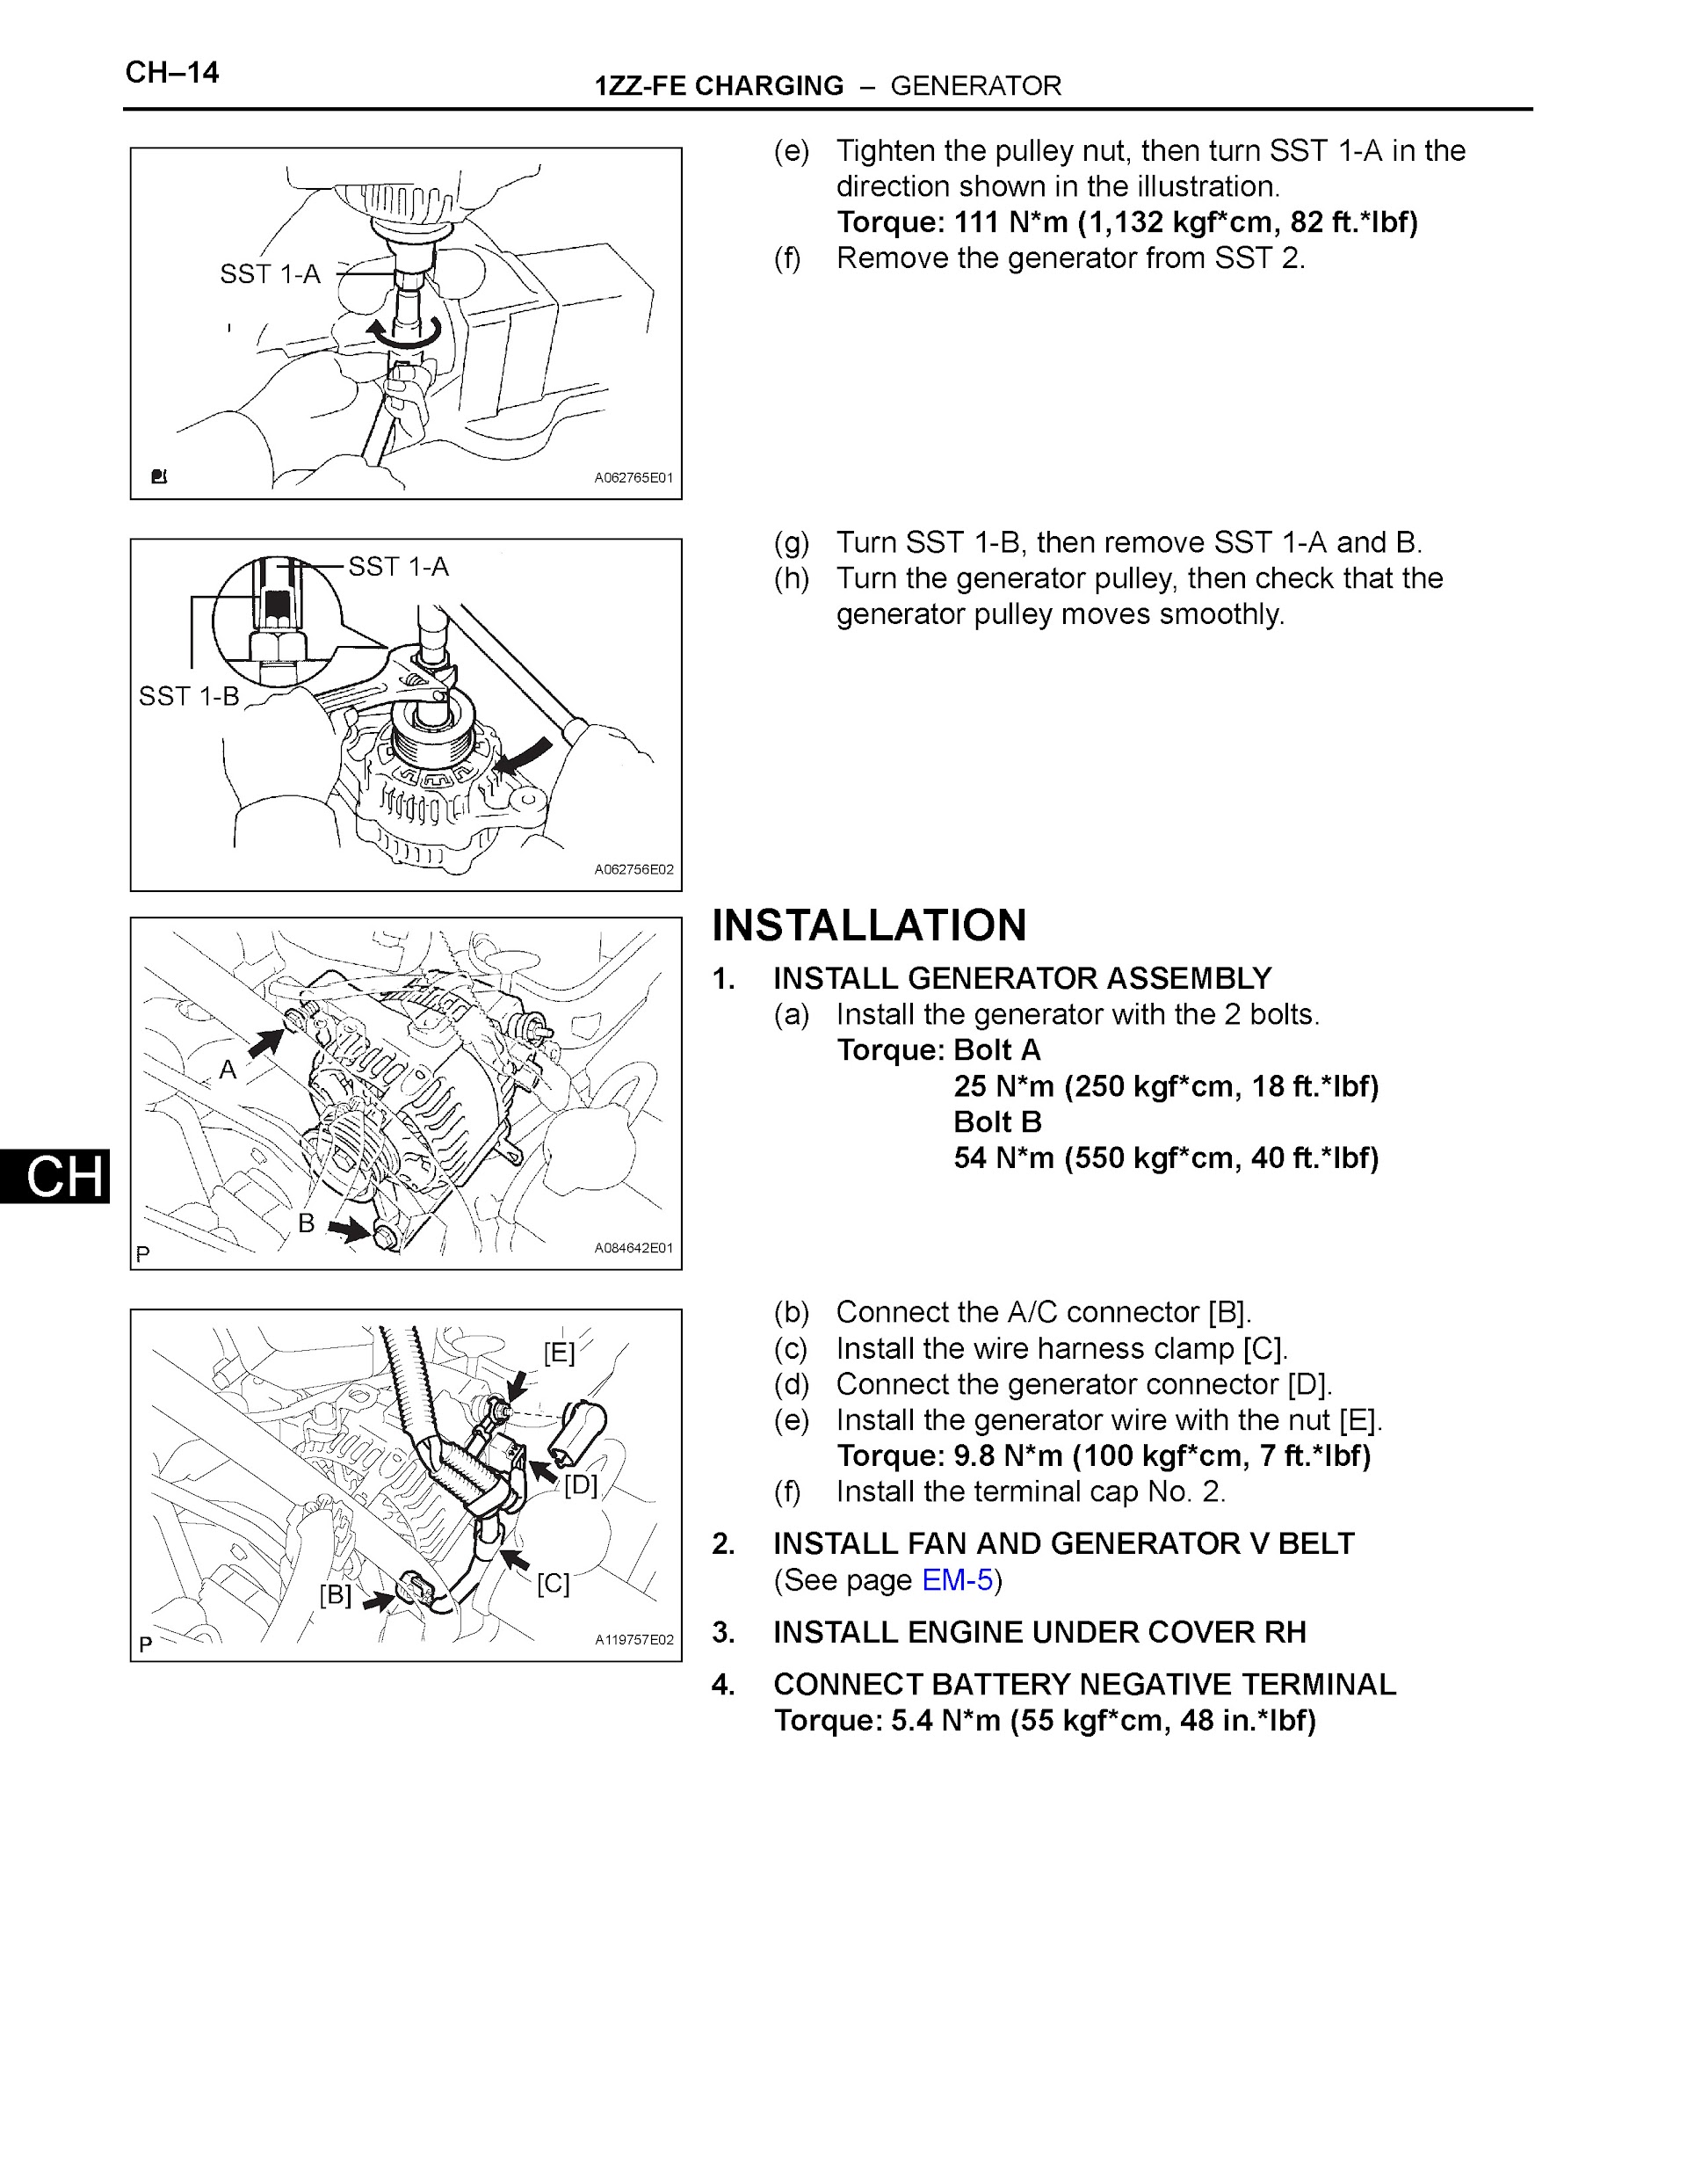 2007 Toyota Corolla Matrix Repair Manual, 1ZZ-FE Charging System